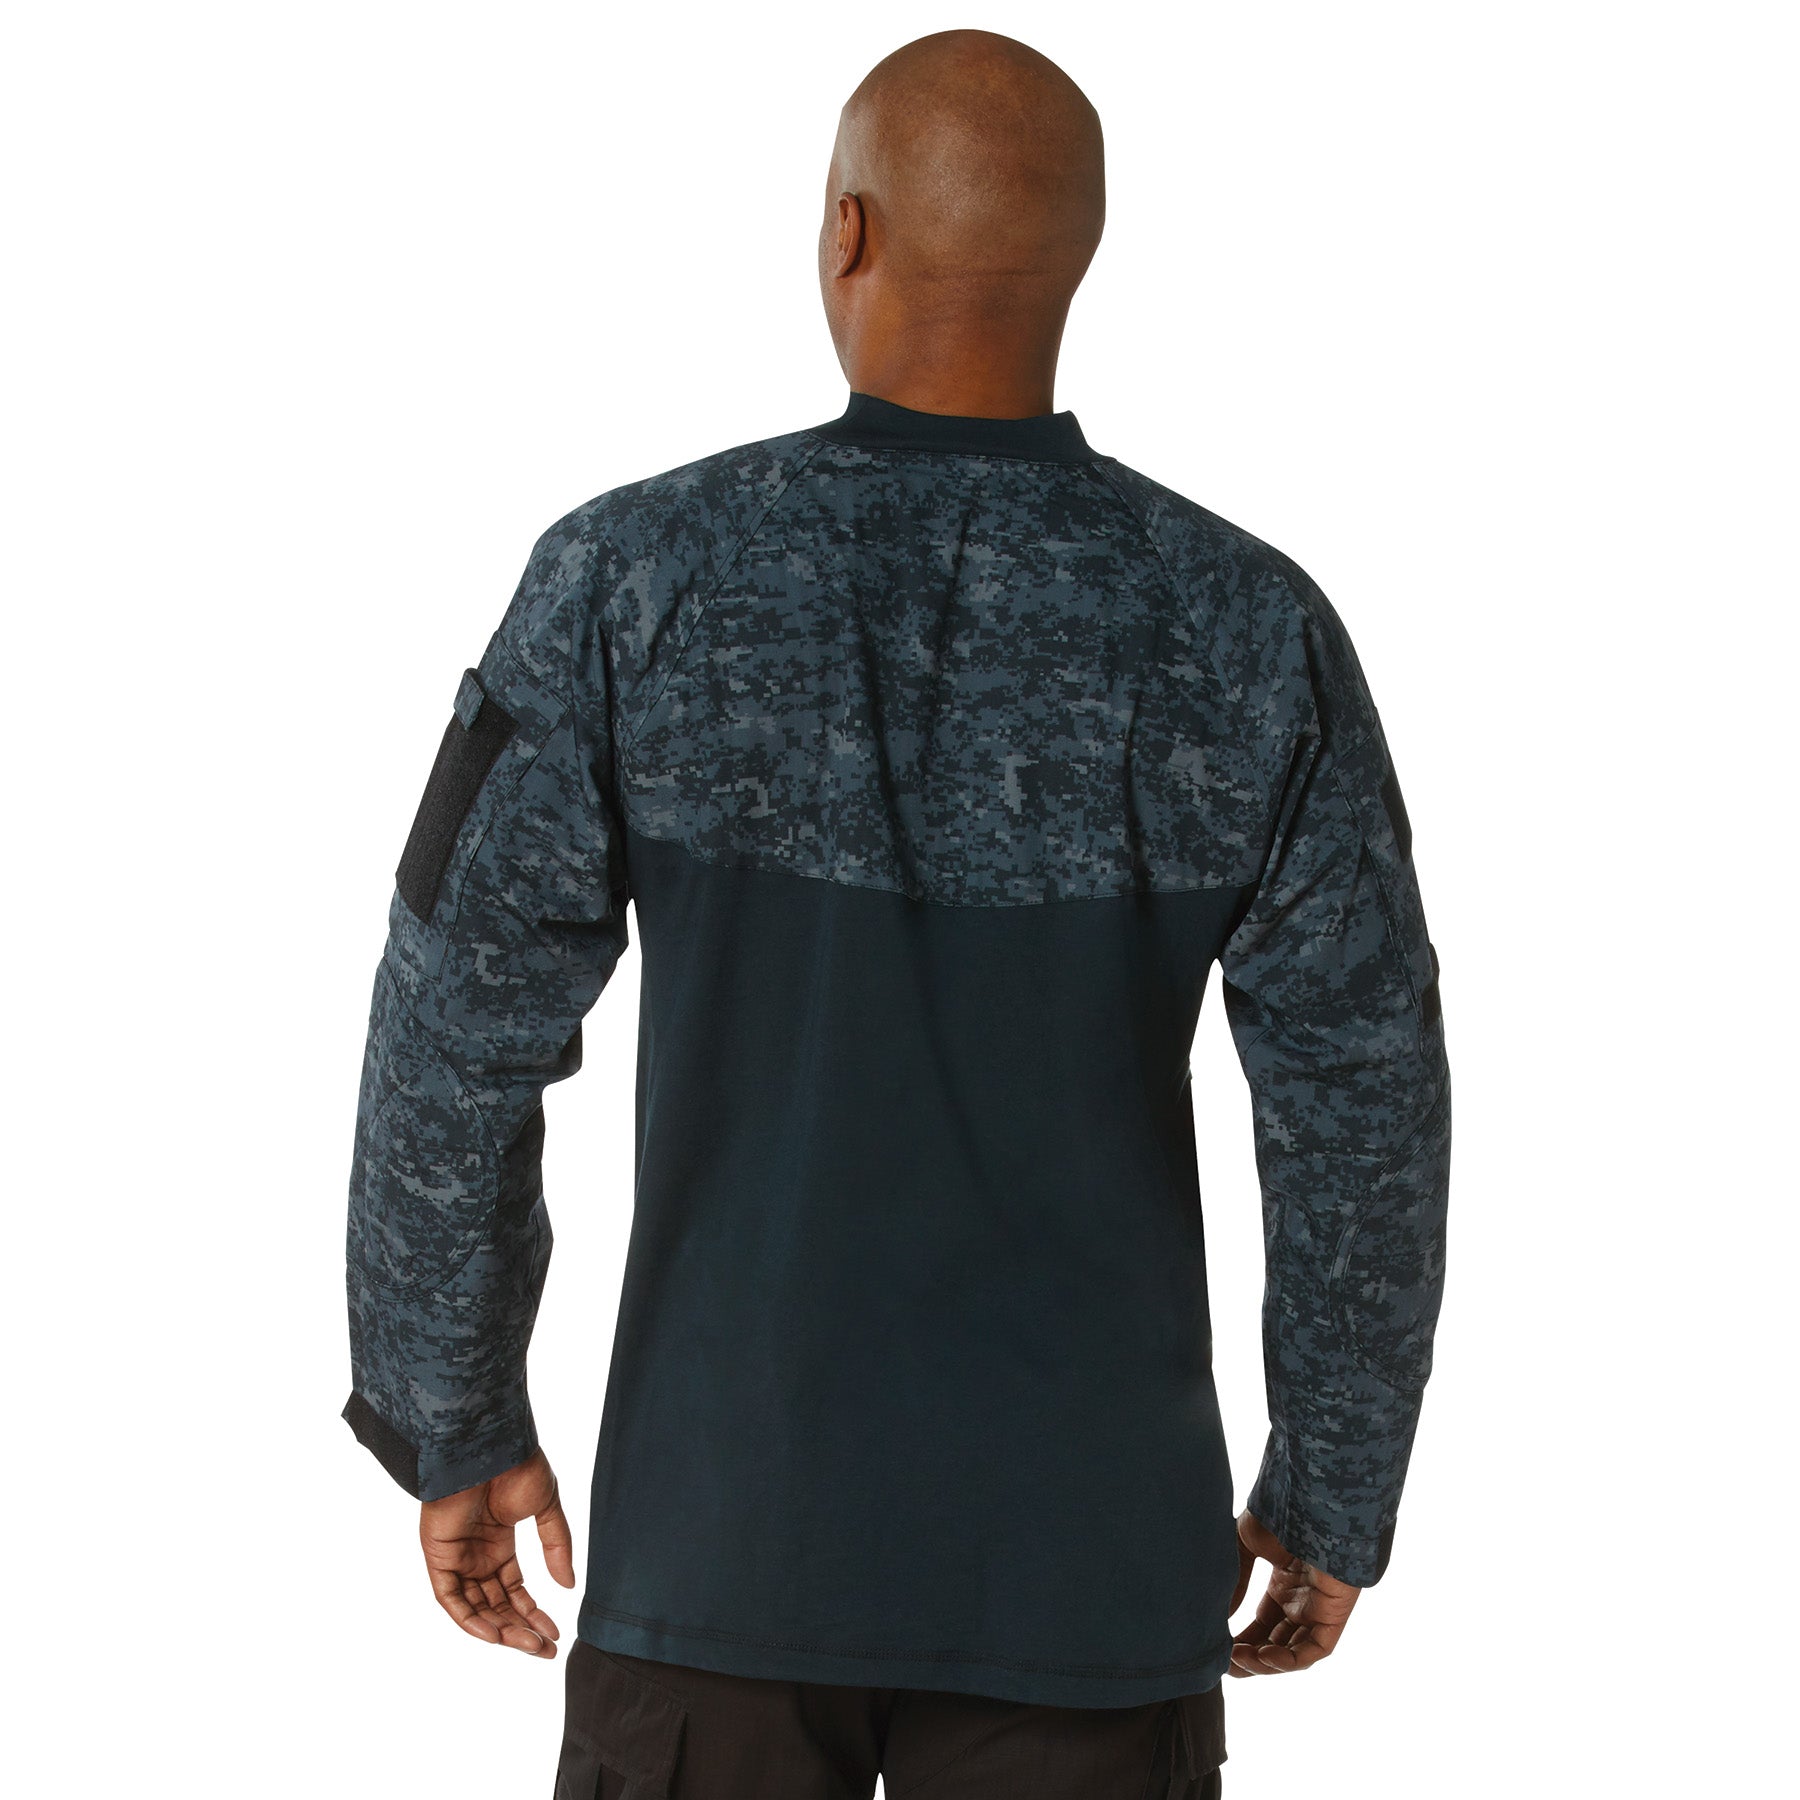 [Military][Fire Retardant] Digital Camo Acrylic/Cotton/Nylon/Cotton Combat Shirts